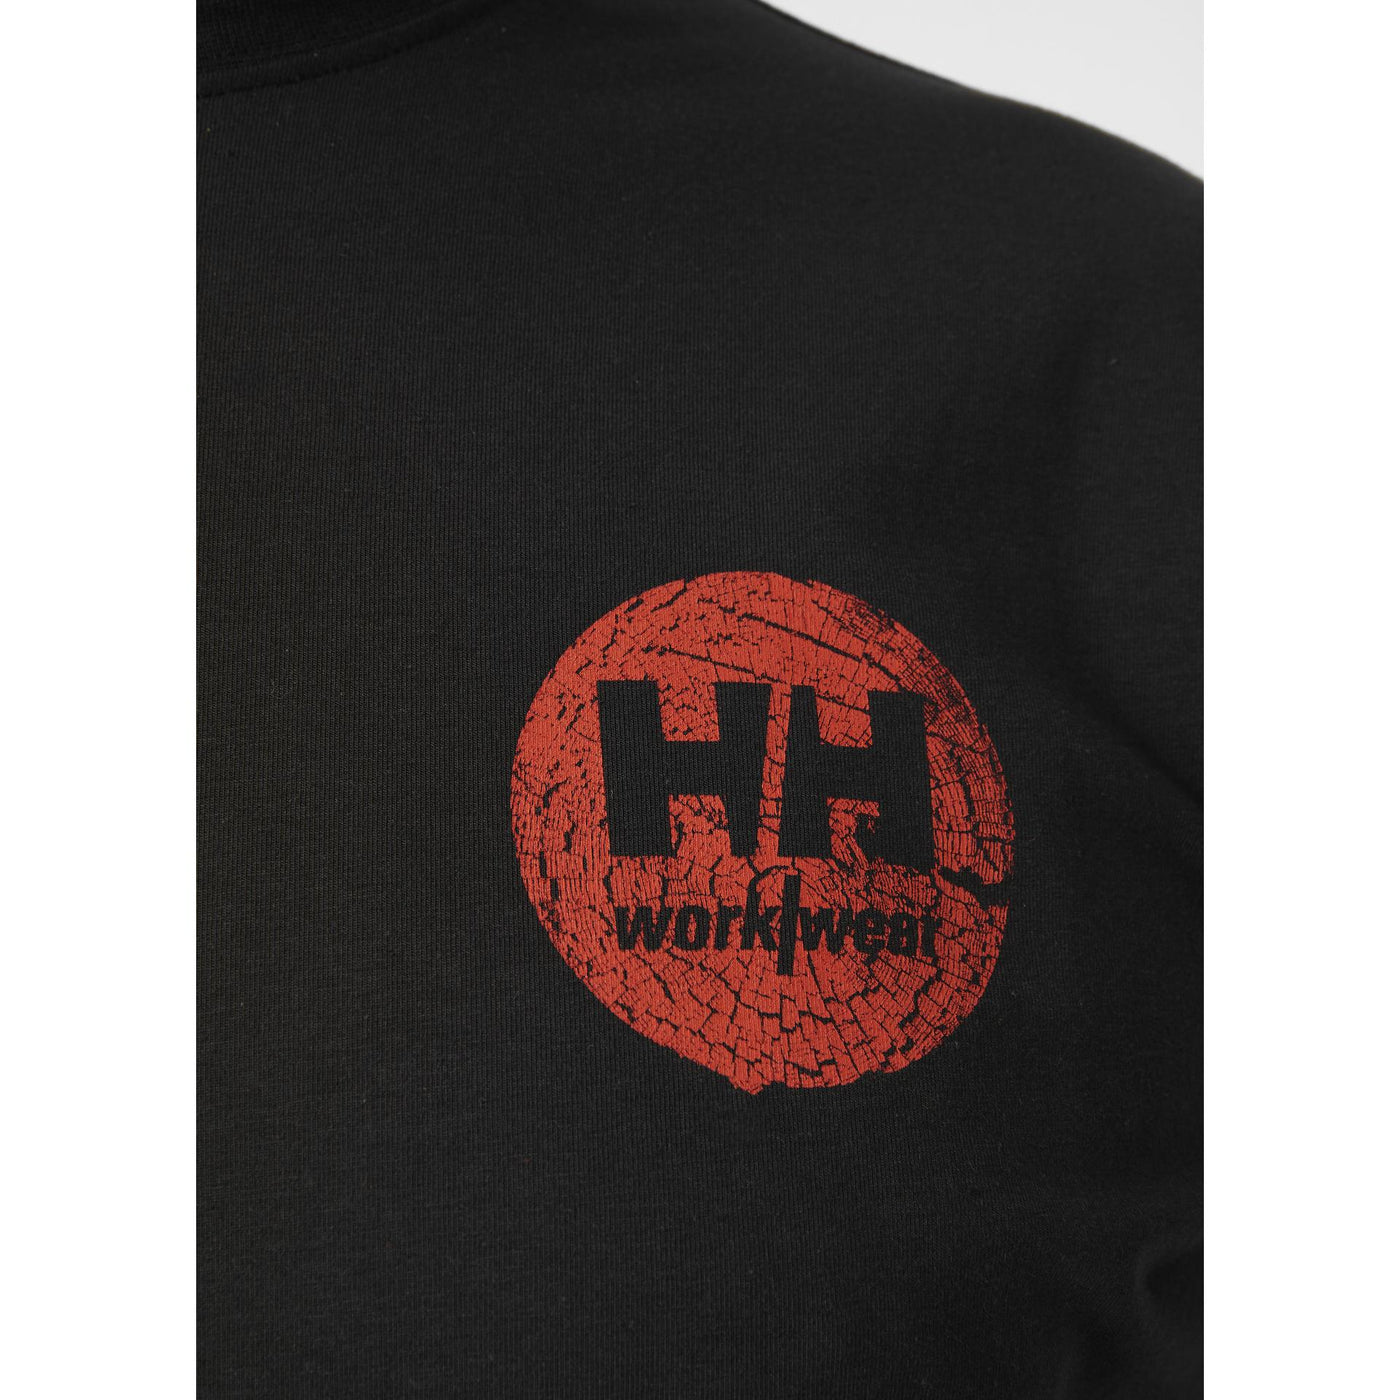 Helly Hansen HH Workwear Graphic T-Shirt Black1 5 #colour_black1